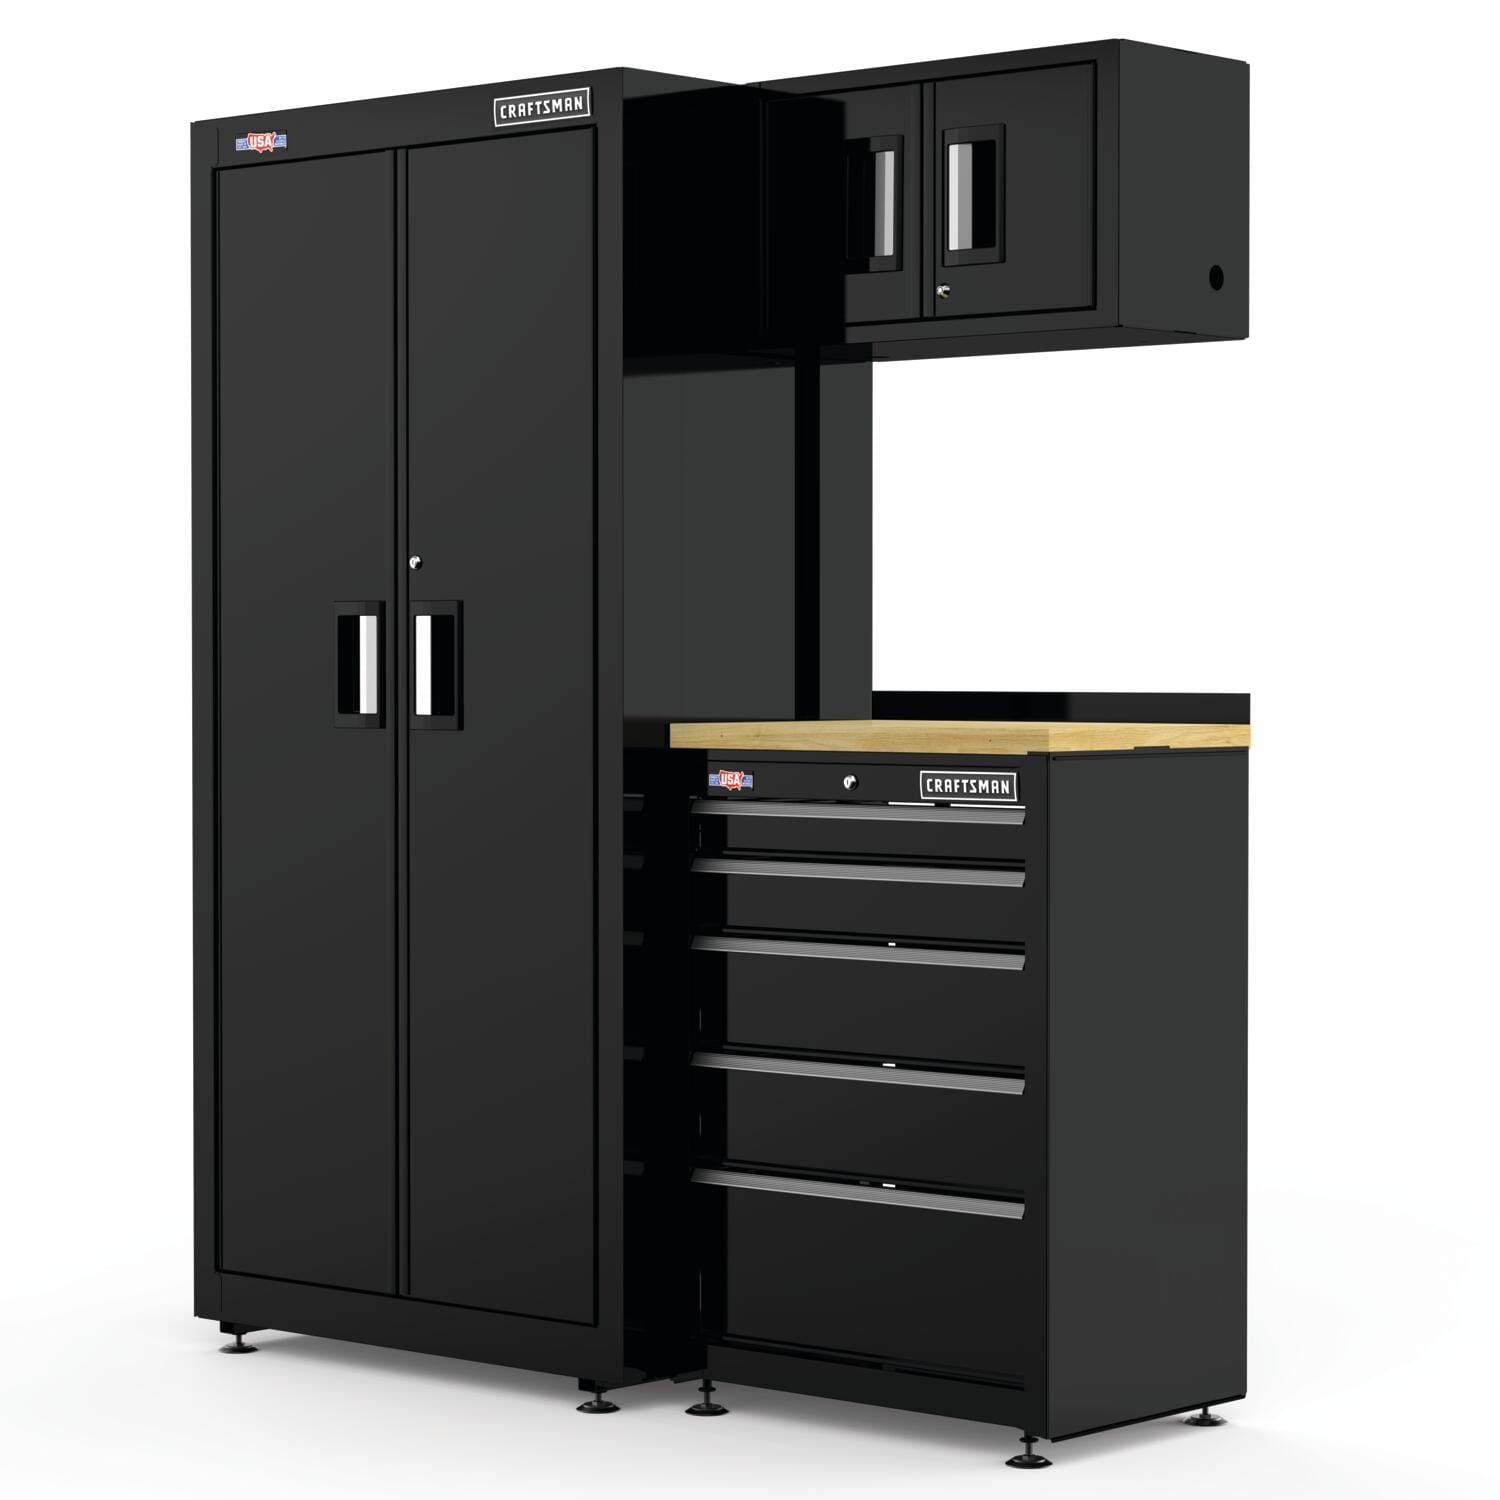 Shop CRAFTSMAN Garage Storage System at